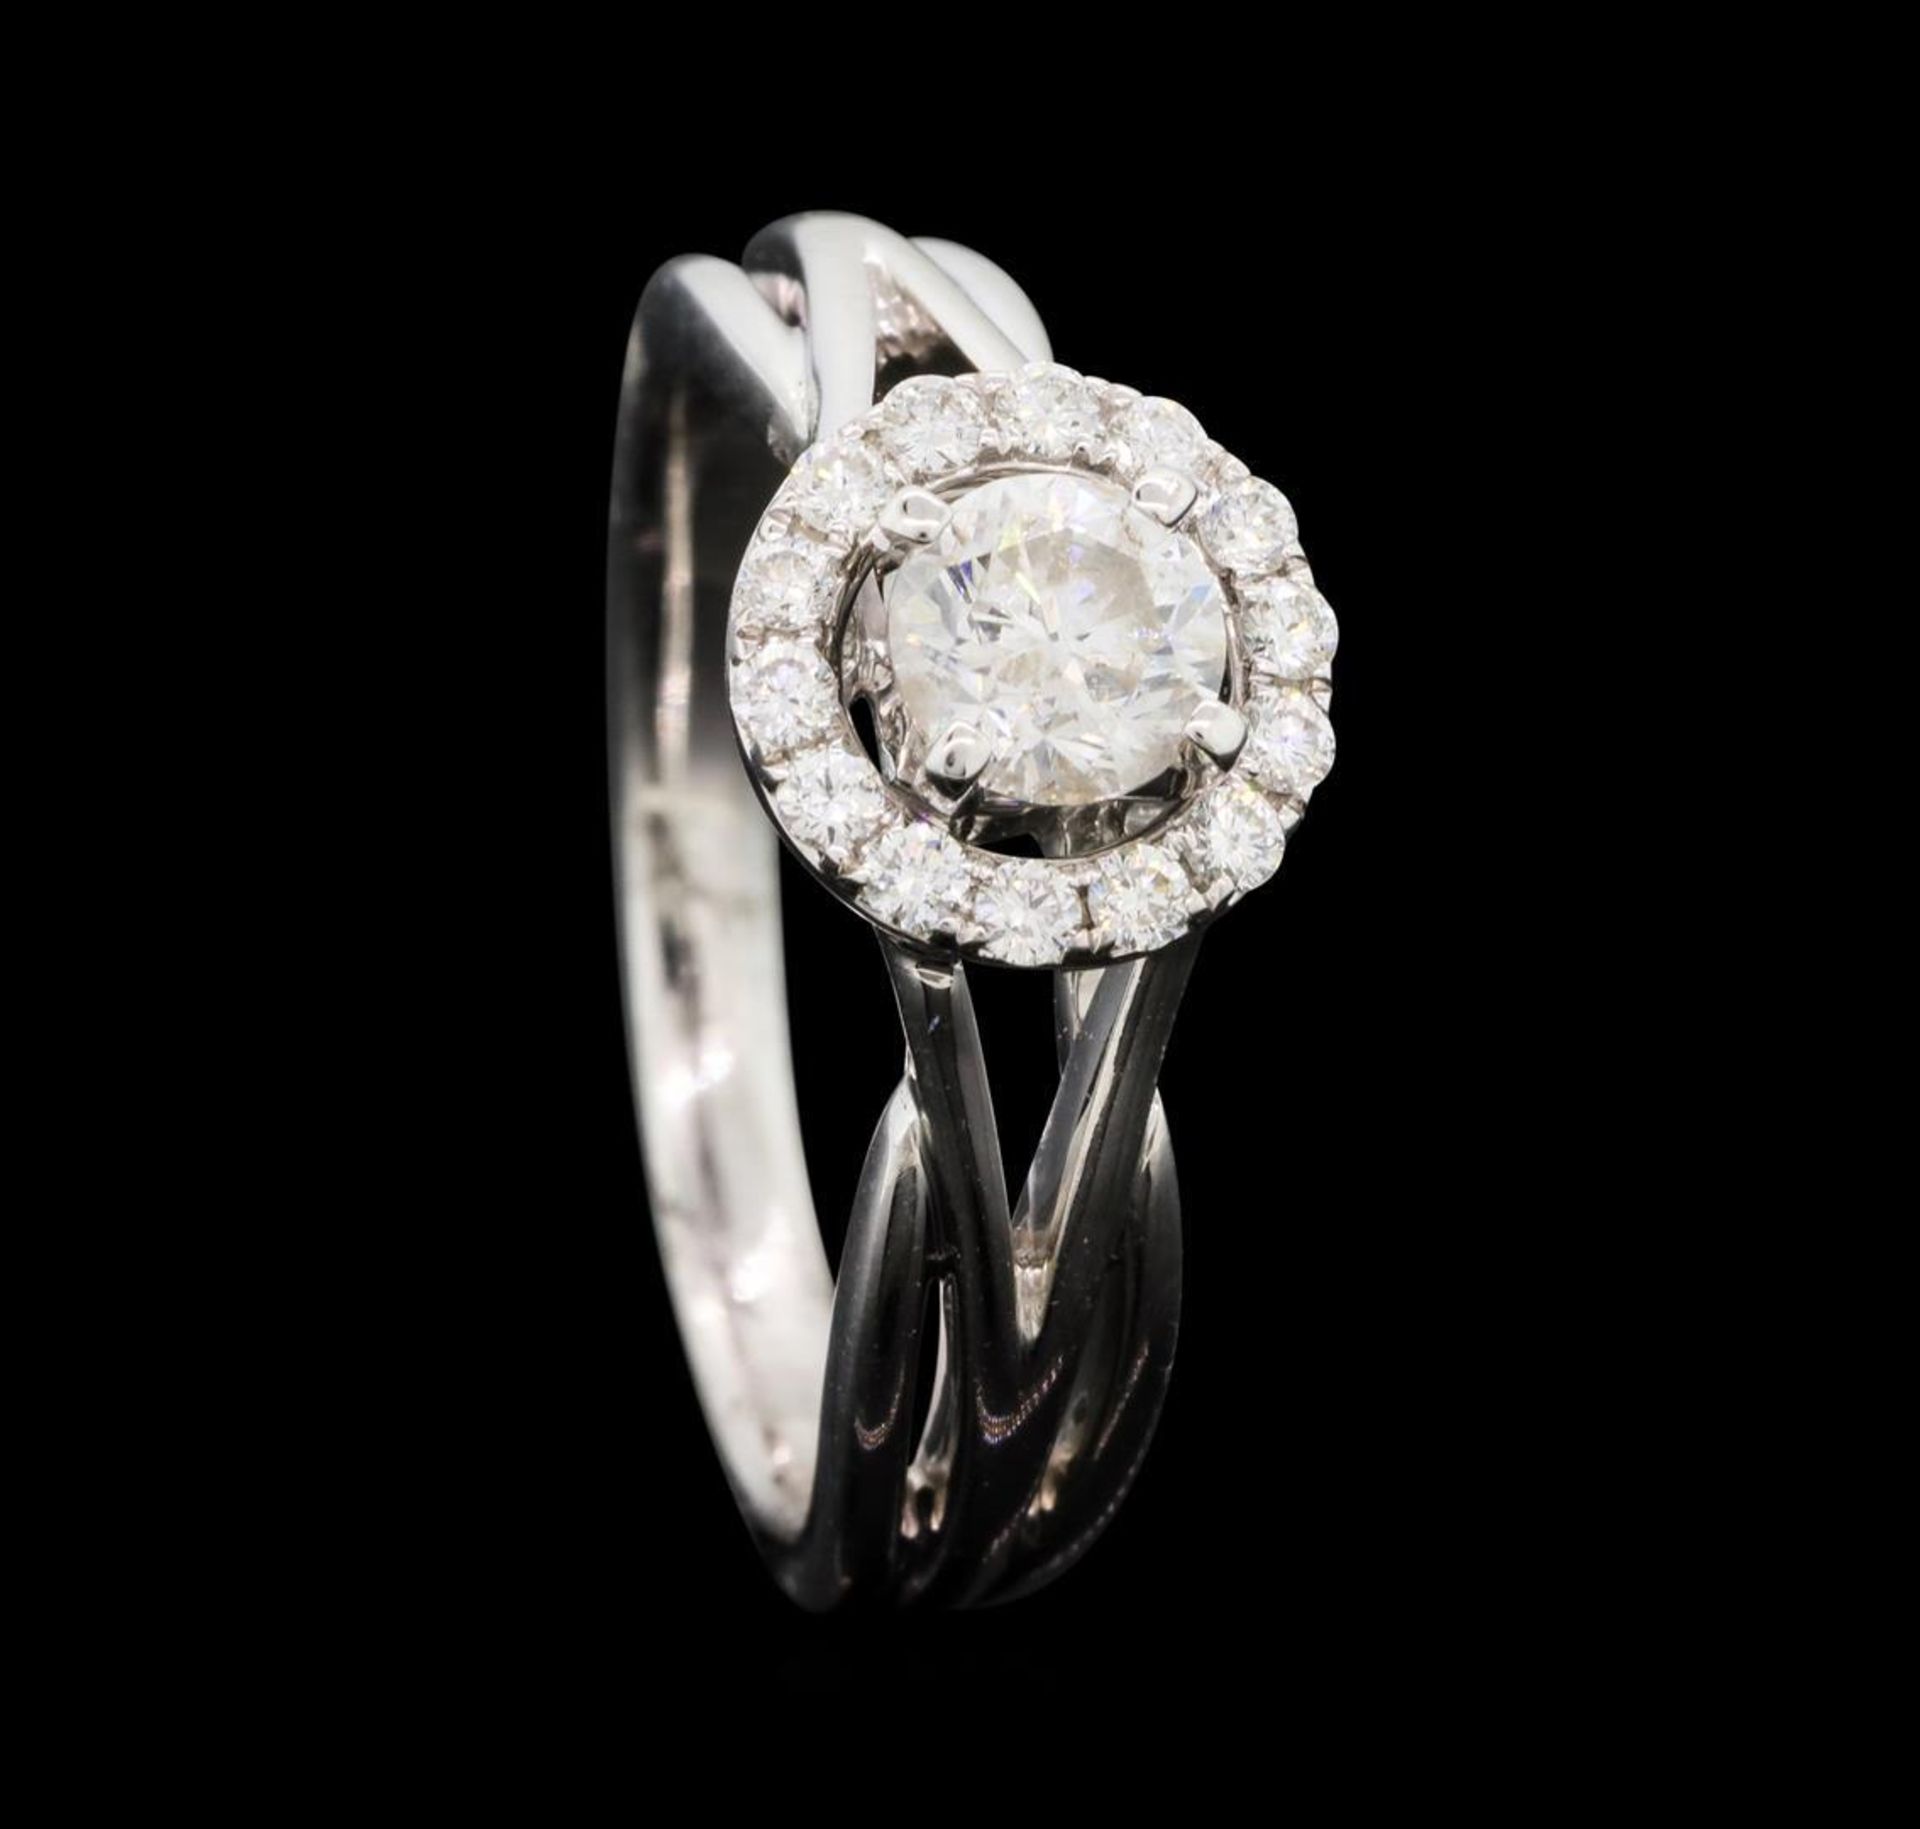 0.74 ctw Diamond Ring - 14KT White Gold - Image 4 of 5